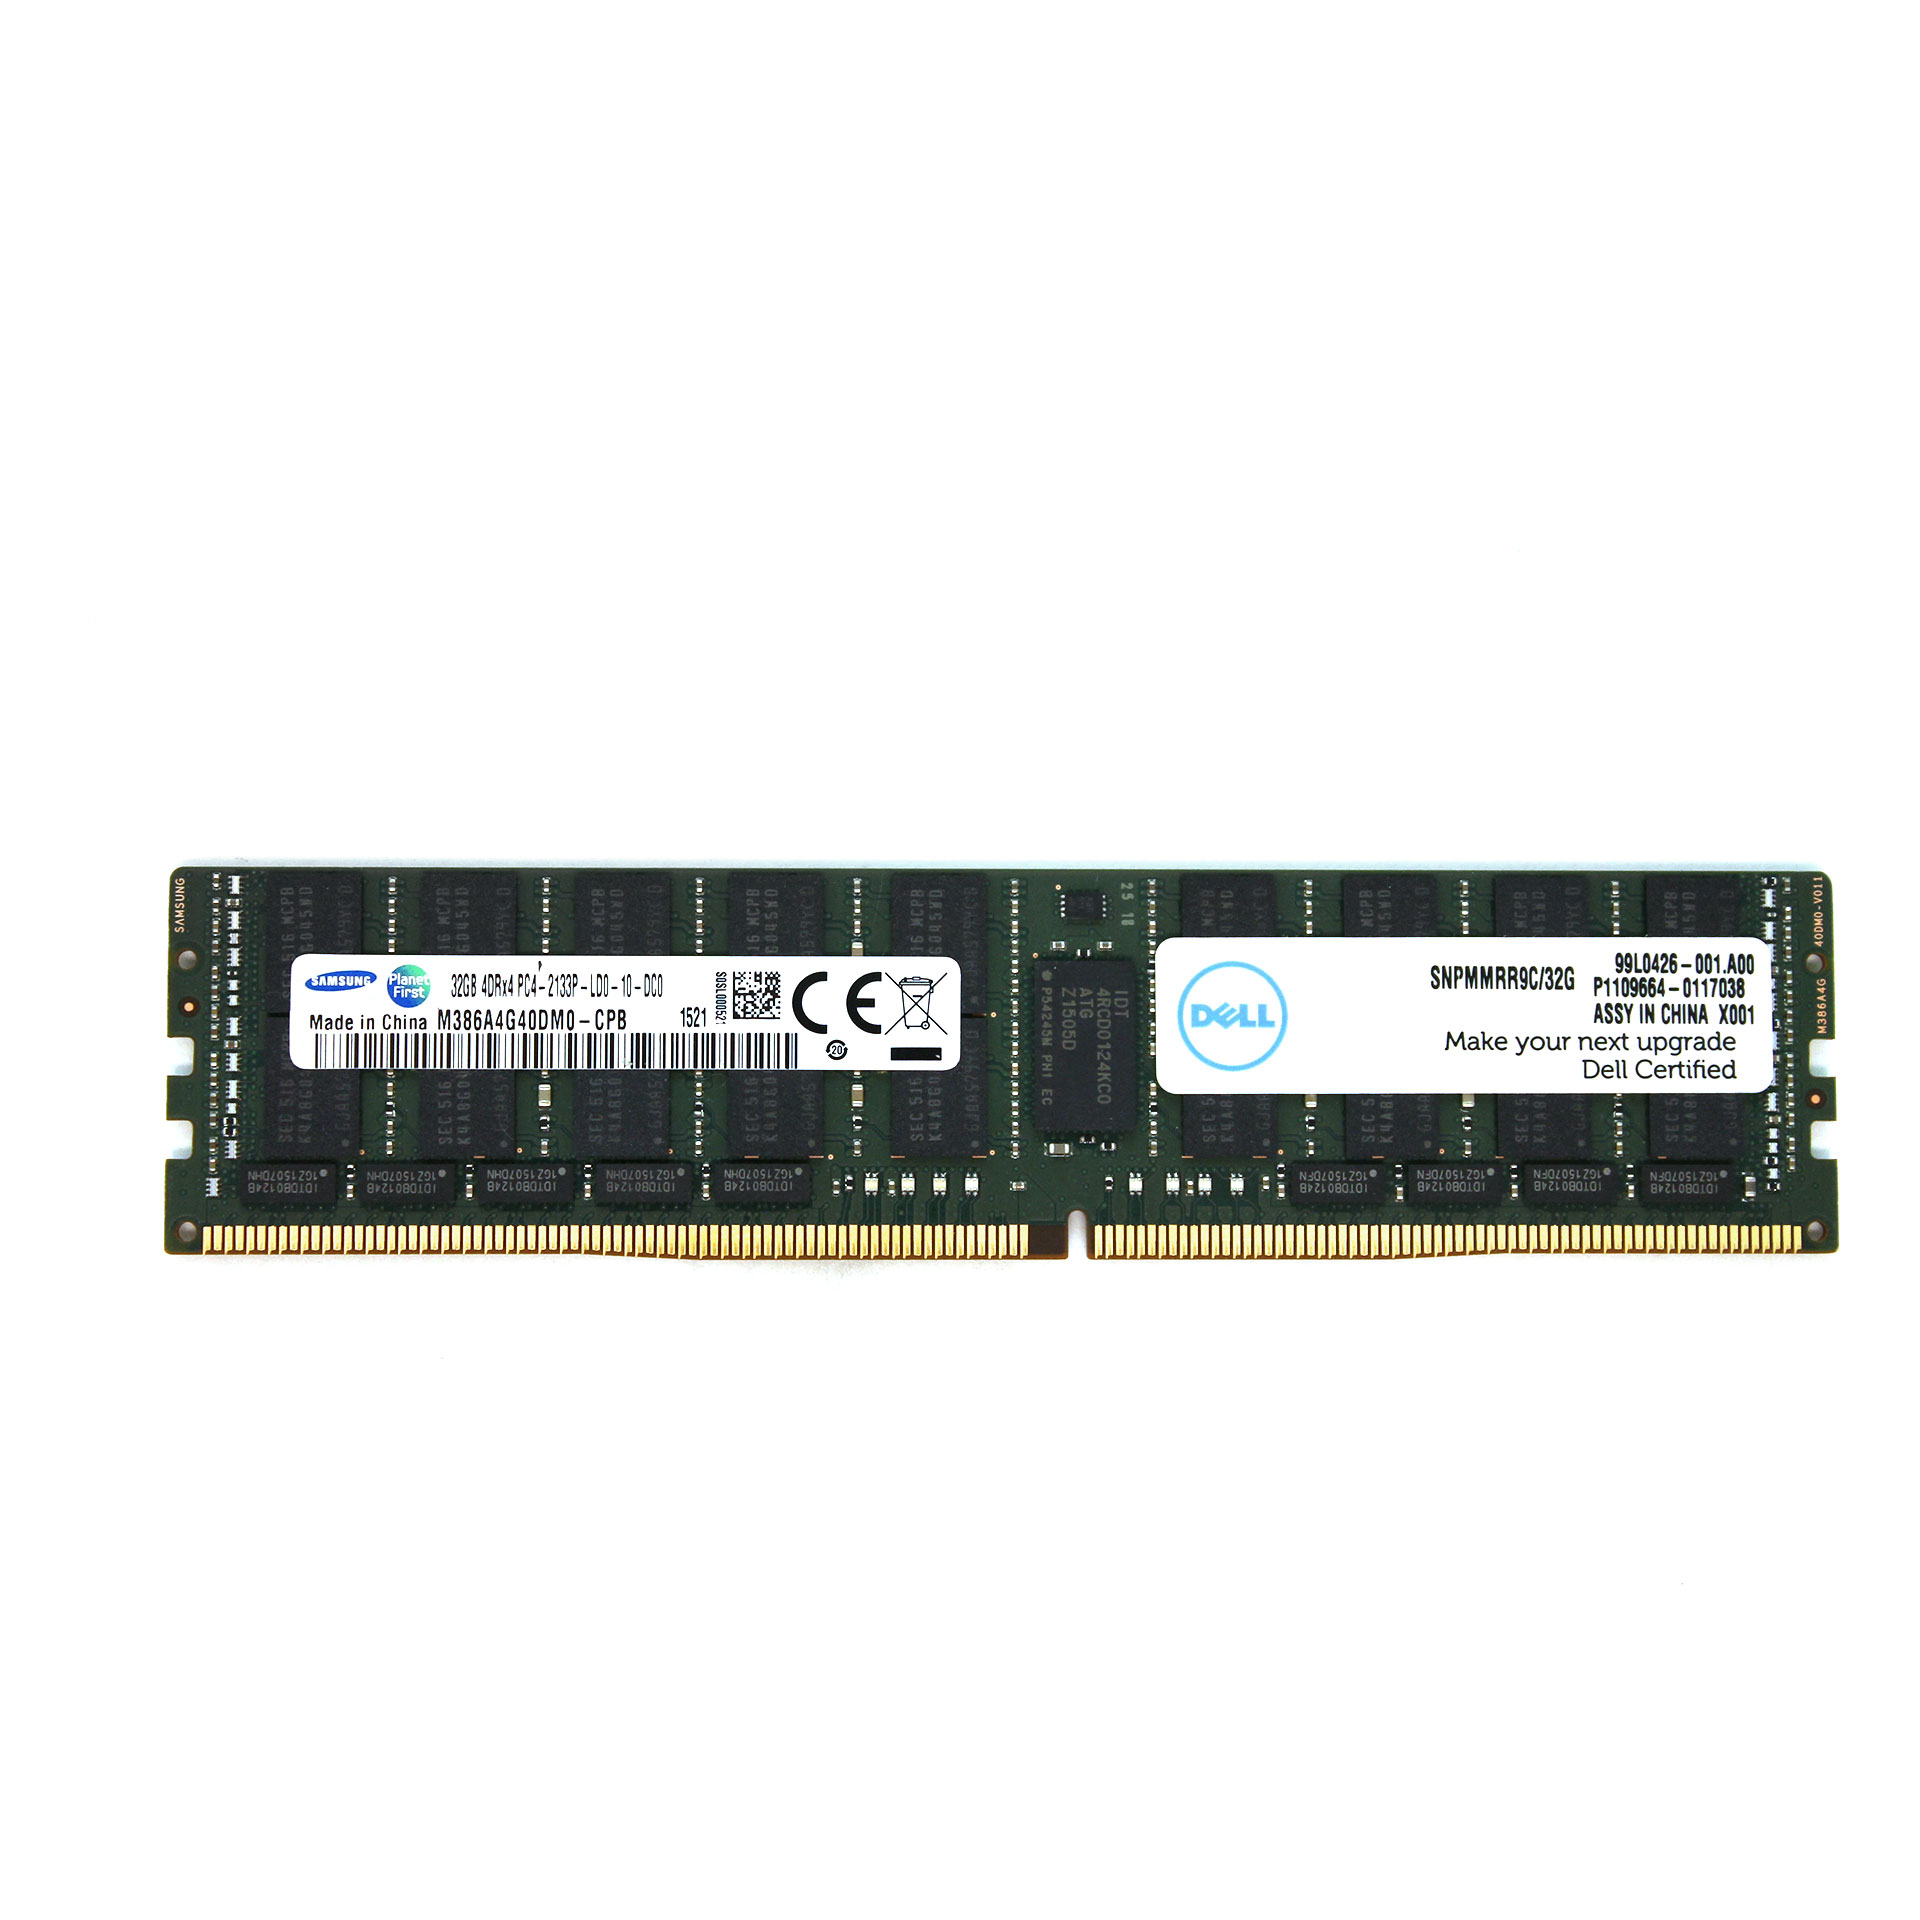 Dell/Samsung RAM DDR4 PC4-2133P ECC SNPMMRR9C/32G Compeve Dell/Samsung 32GB RAM DDR4 4DRx4 PC4-2133P ECC SNPMMRR9C/32G [SNPMMRR9C/32G] - $269.00 : Professional Multi Monitor Workstations, Graphics Card Experts